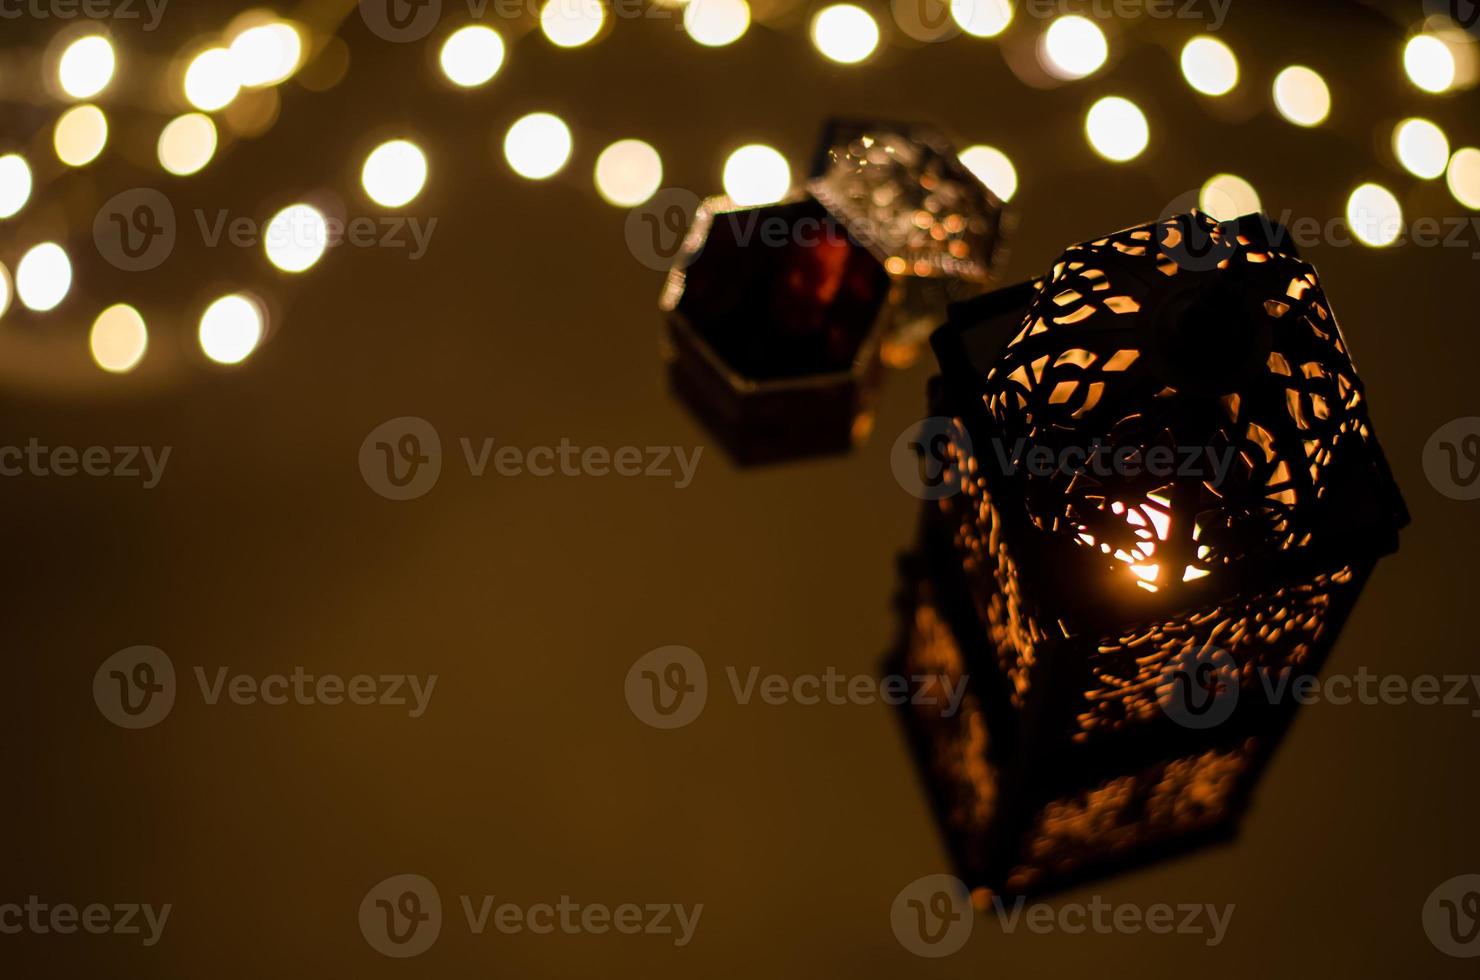 foco seletivo da lanterna com reflexo de frutas de tâmaras da luz do bokeh para a festa muçulmana do mês sagrado do ramadã kareem. foto